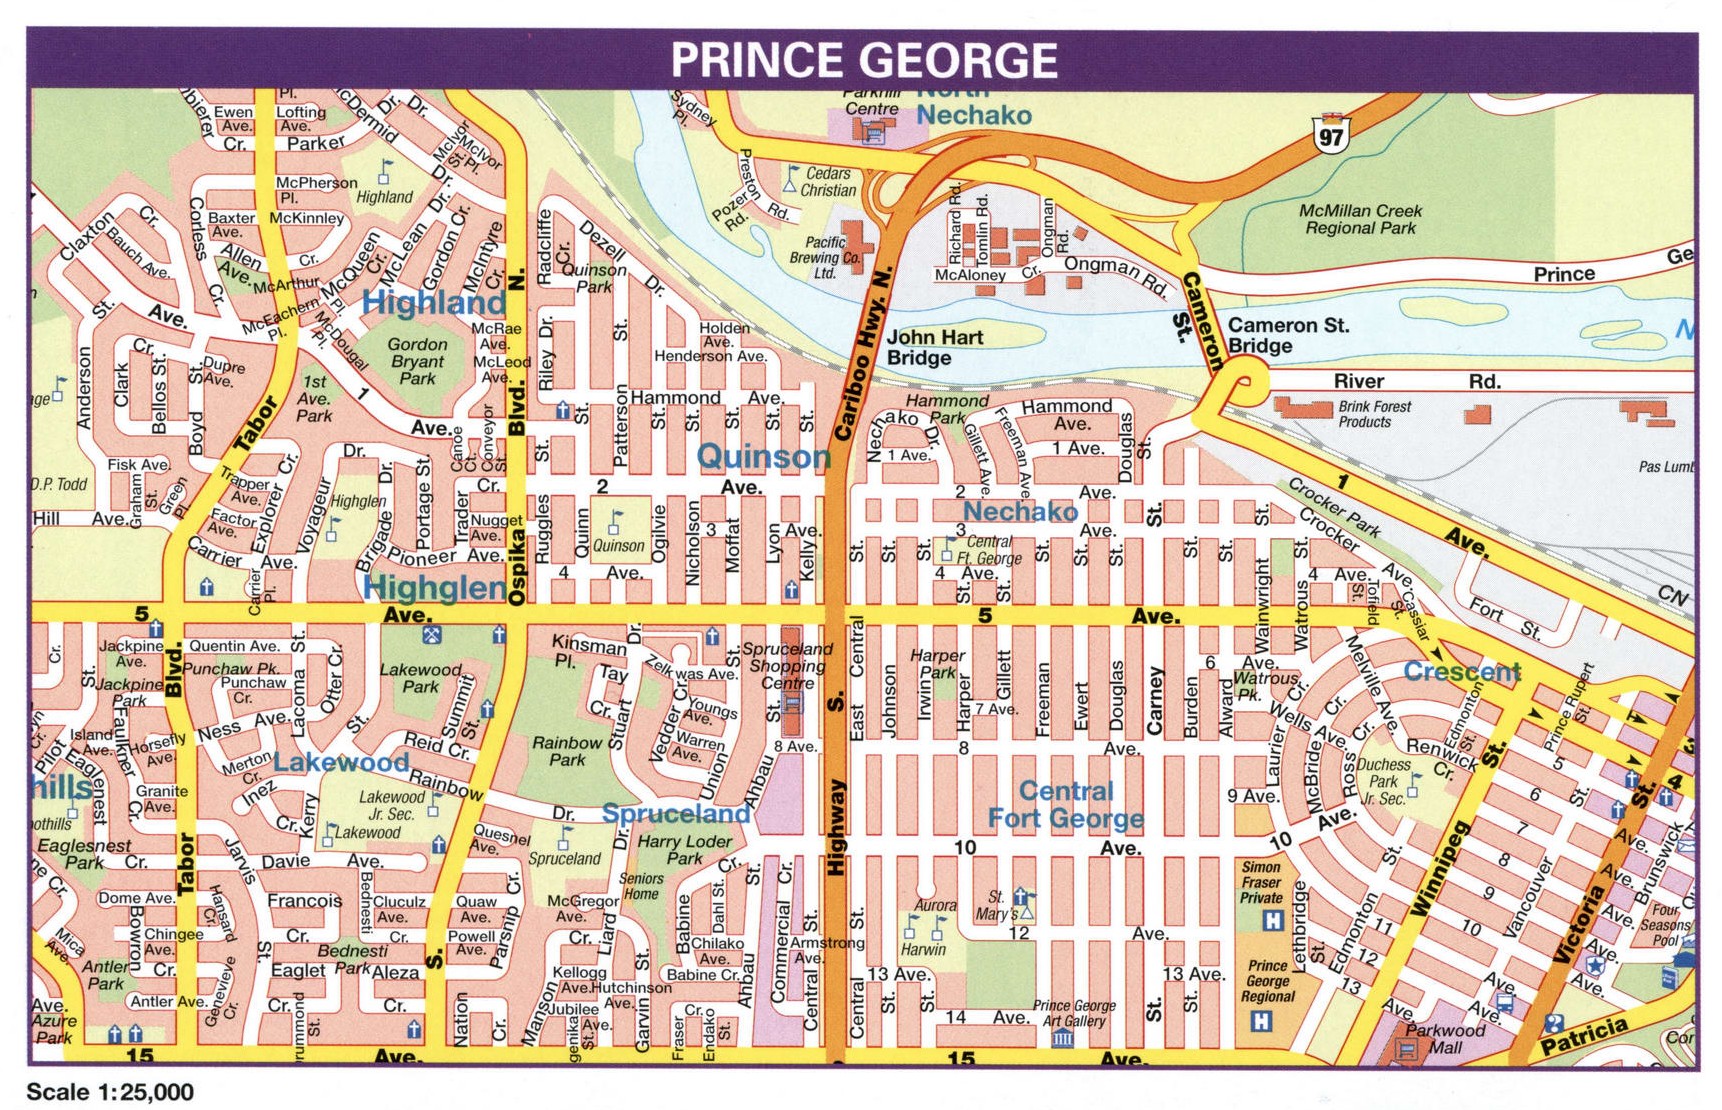 Prince George city map